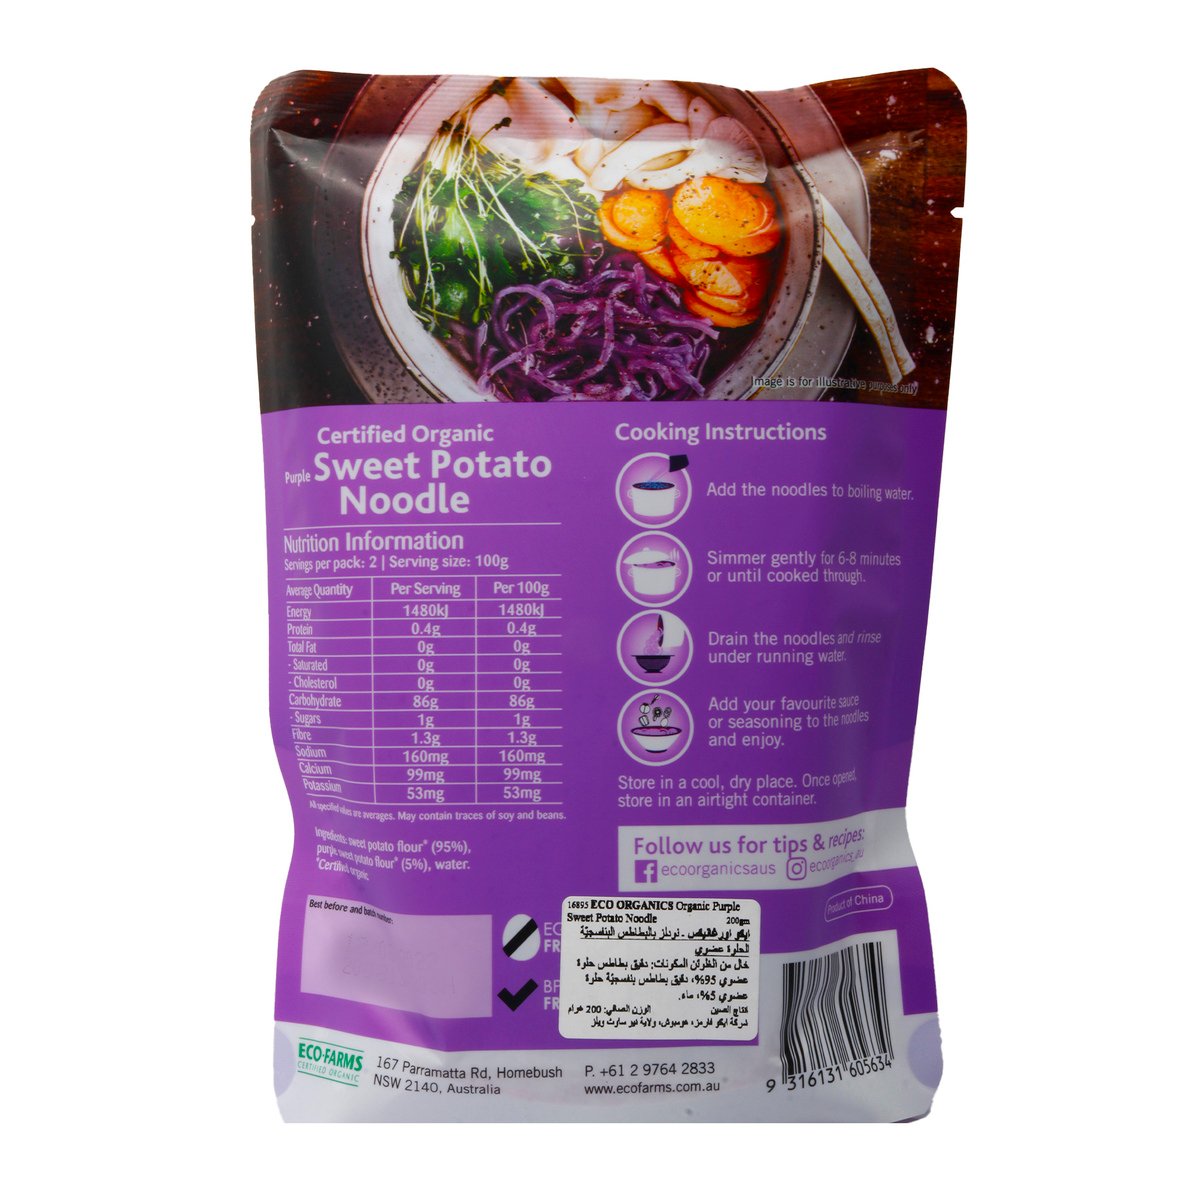 Eco Organics Noodle Purple Sweet Potato 200g